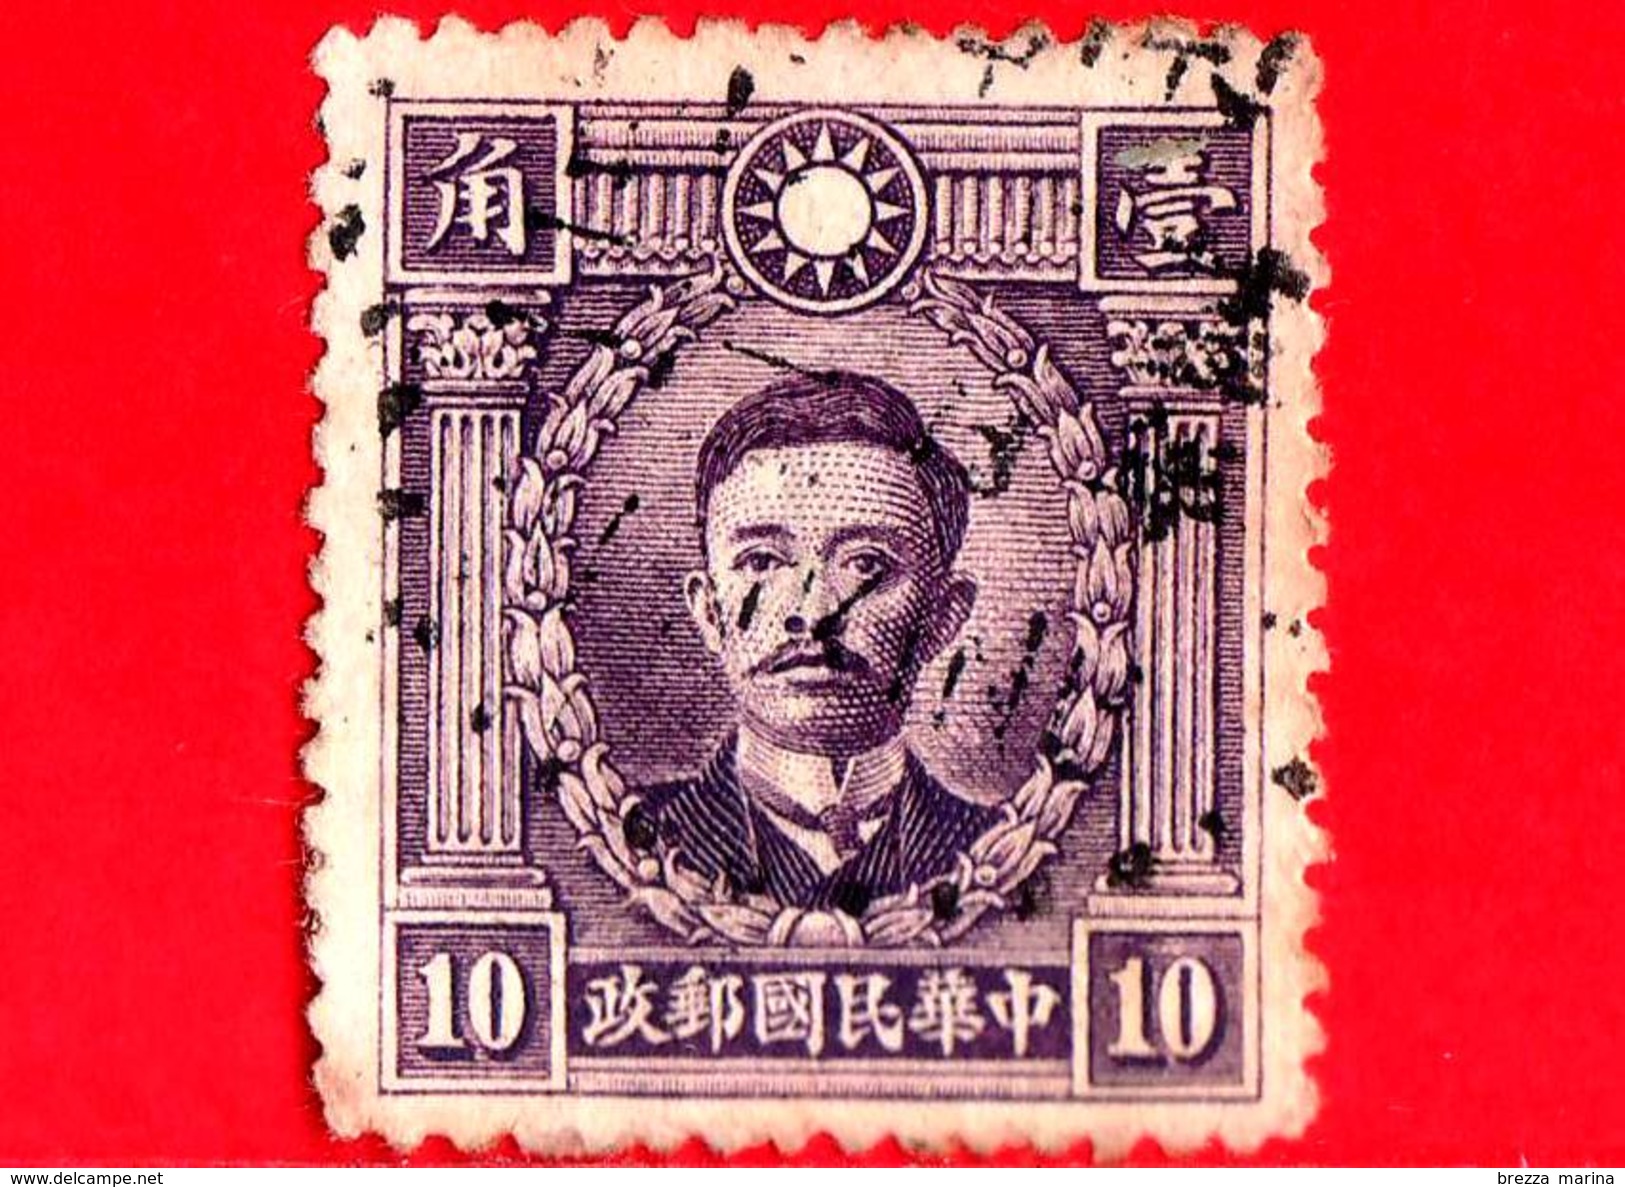 CINA - Usato - 1933 - Emissione Provinciale - Szechuan - Sung Chiao Jen - 10 - Sichuan 1933-34